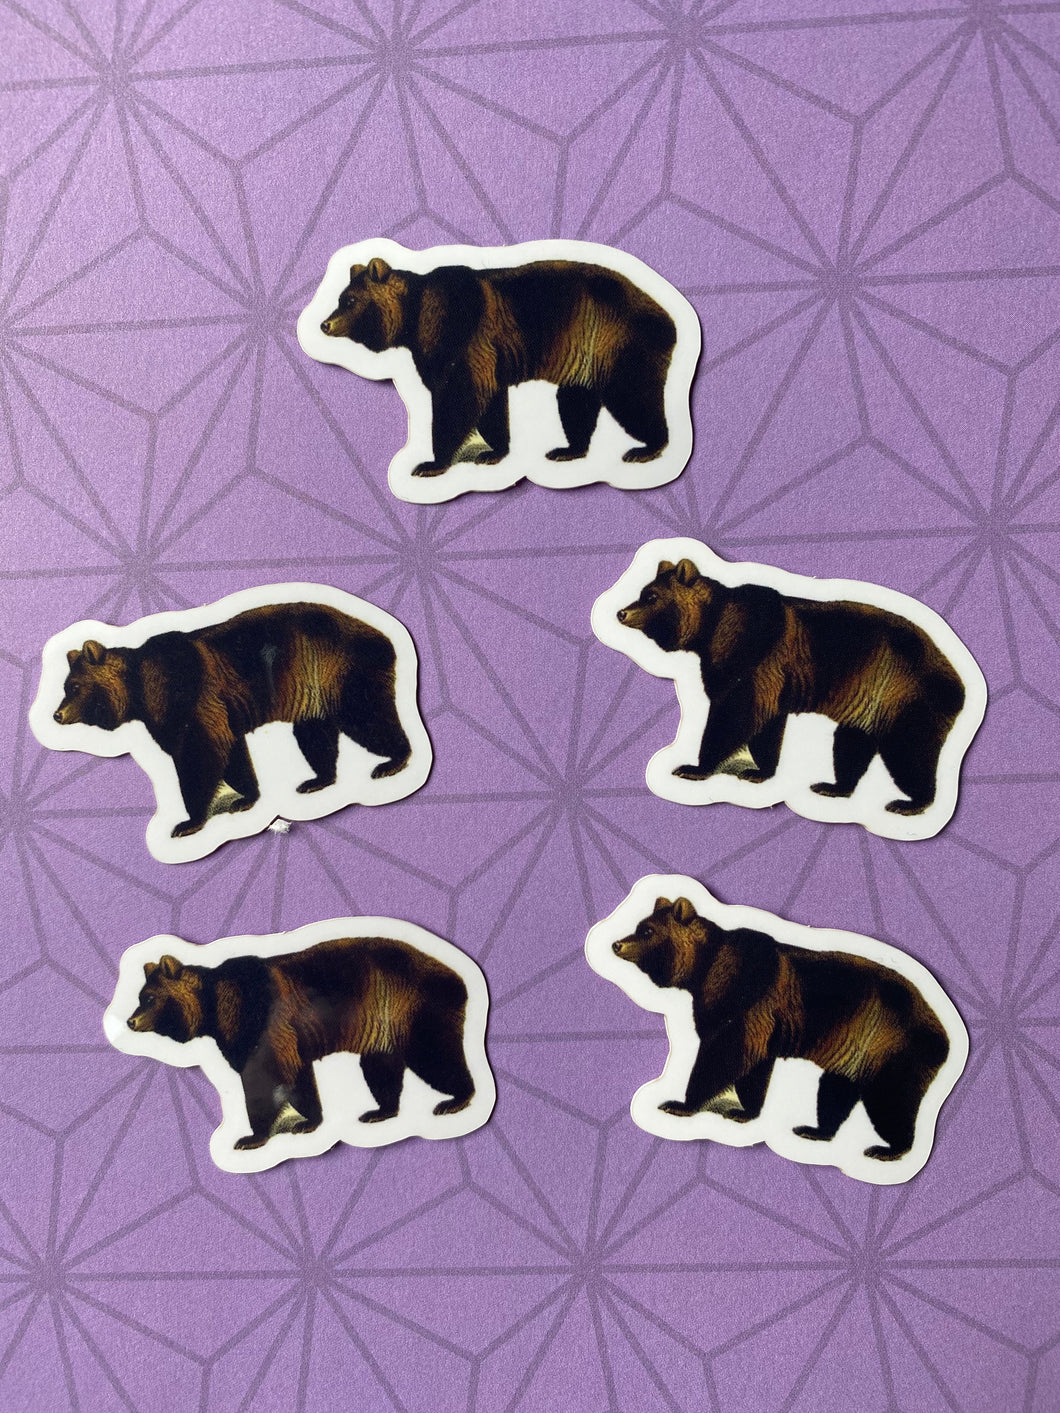 Bear vinyl stickers